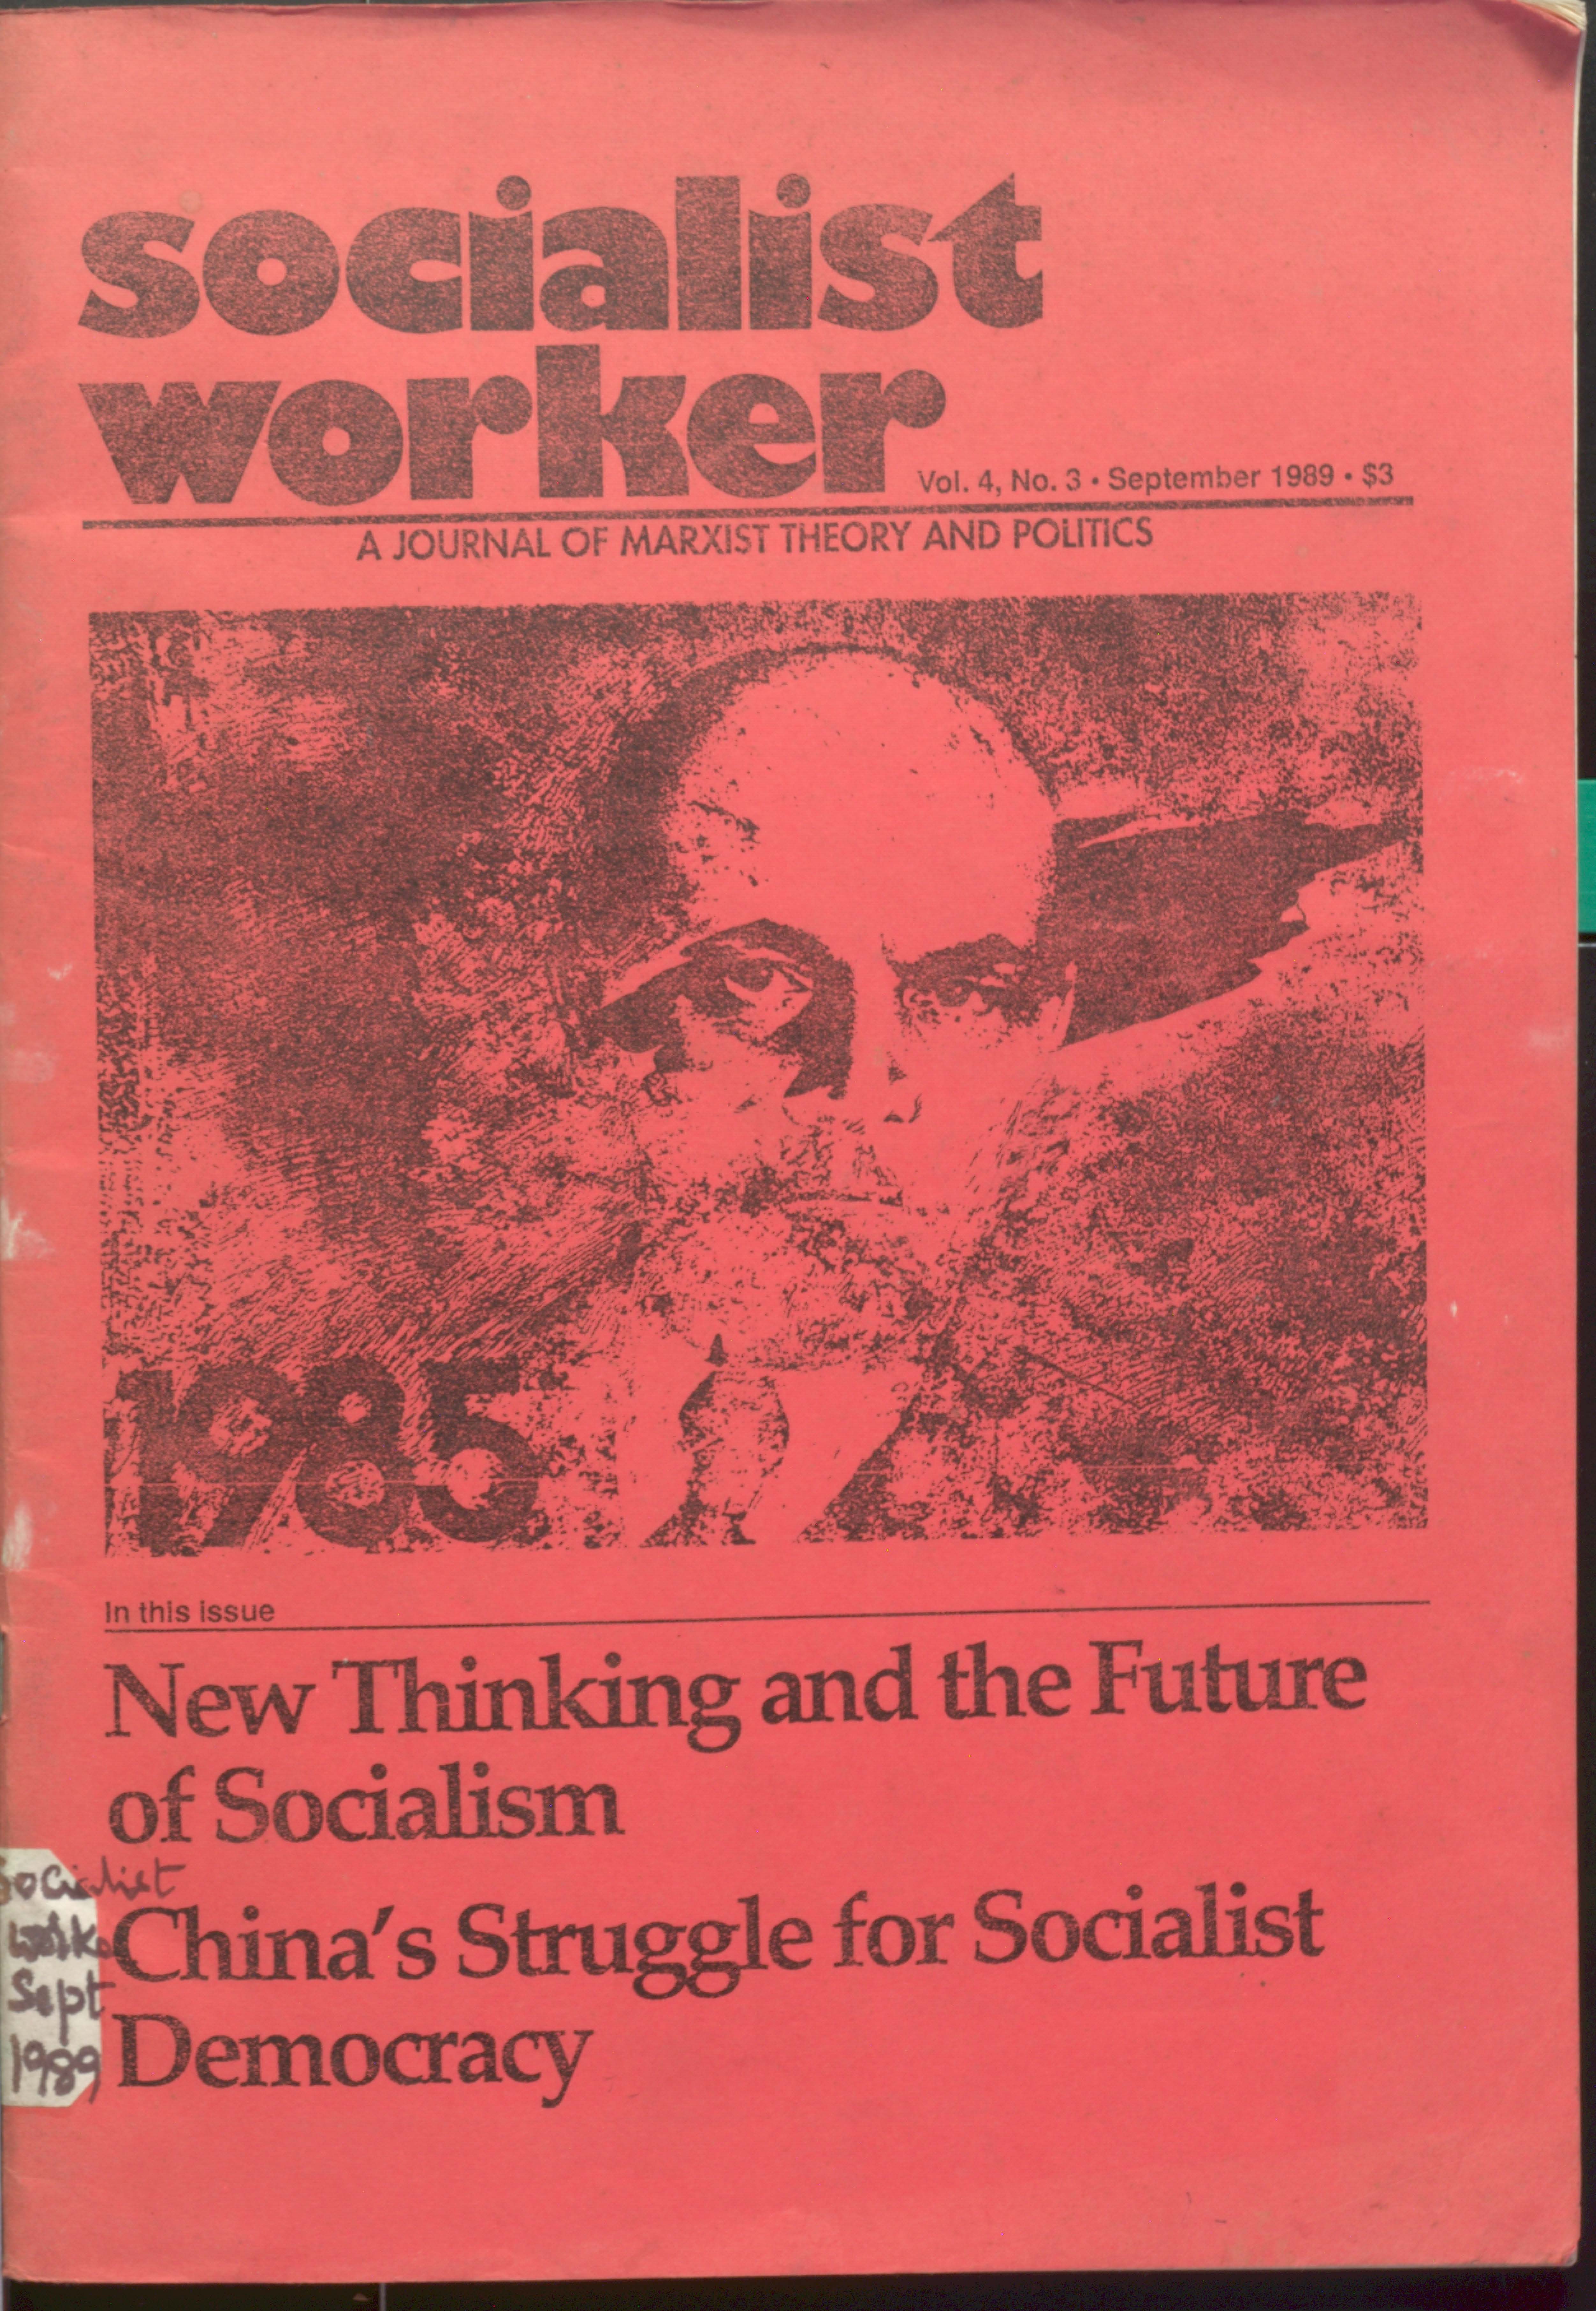 Socialist worker  (vol-4 no-3 september 1989)